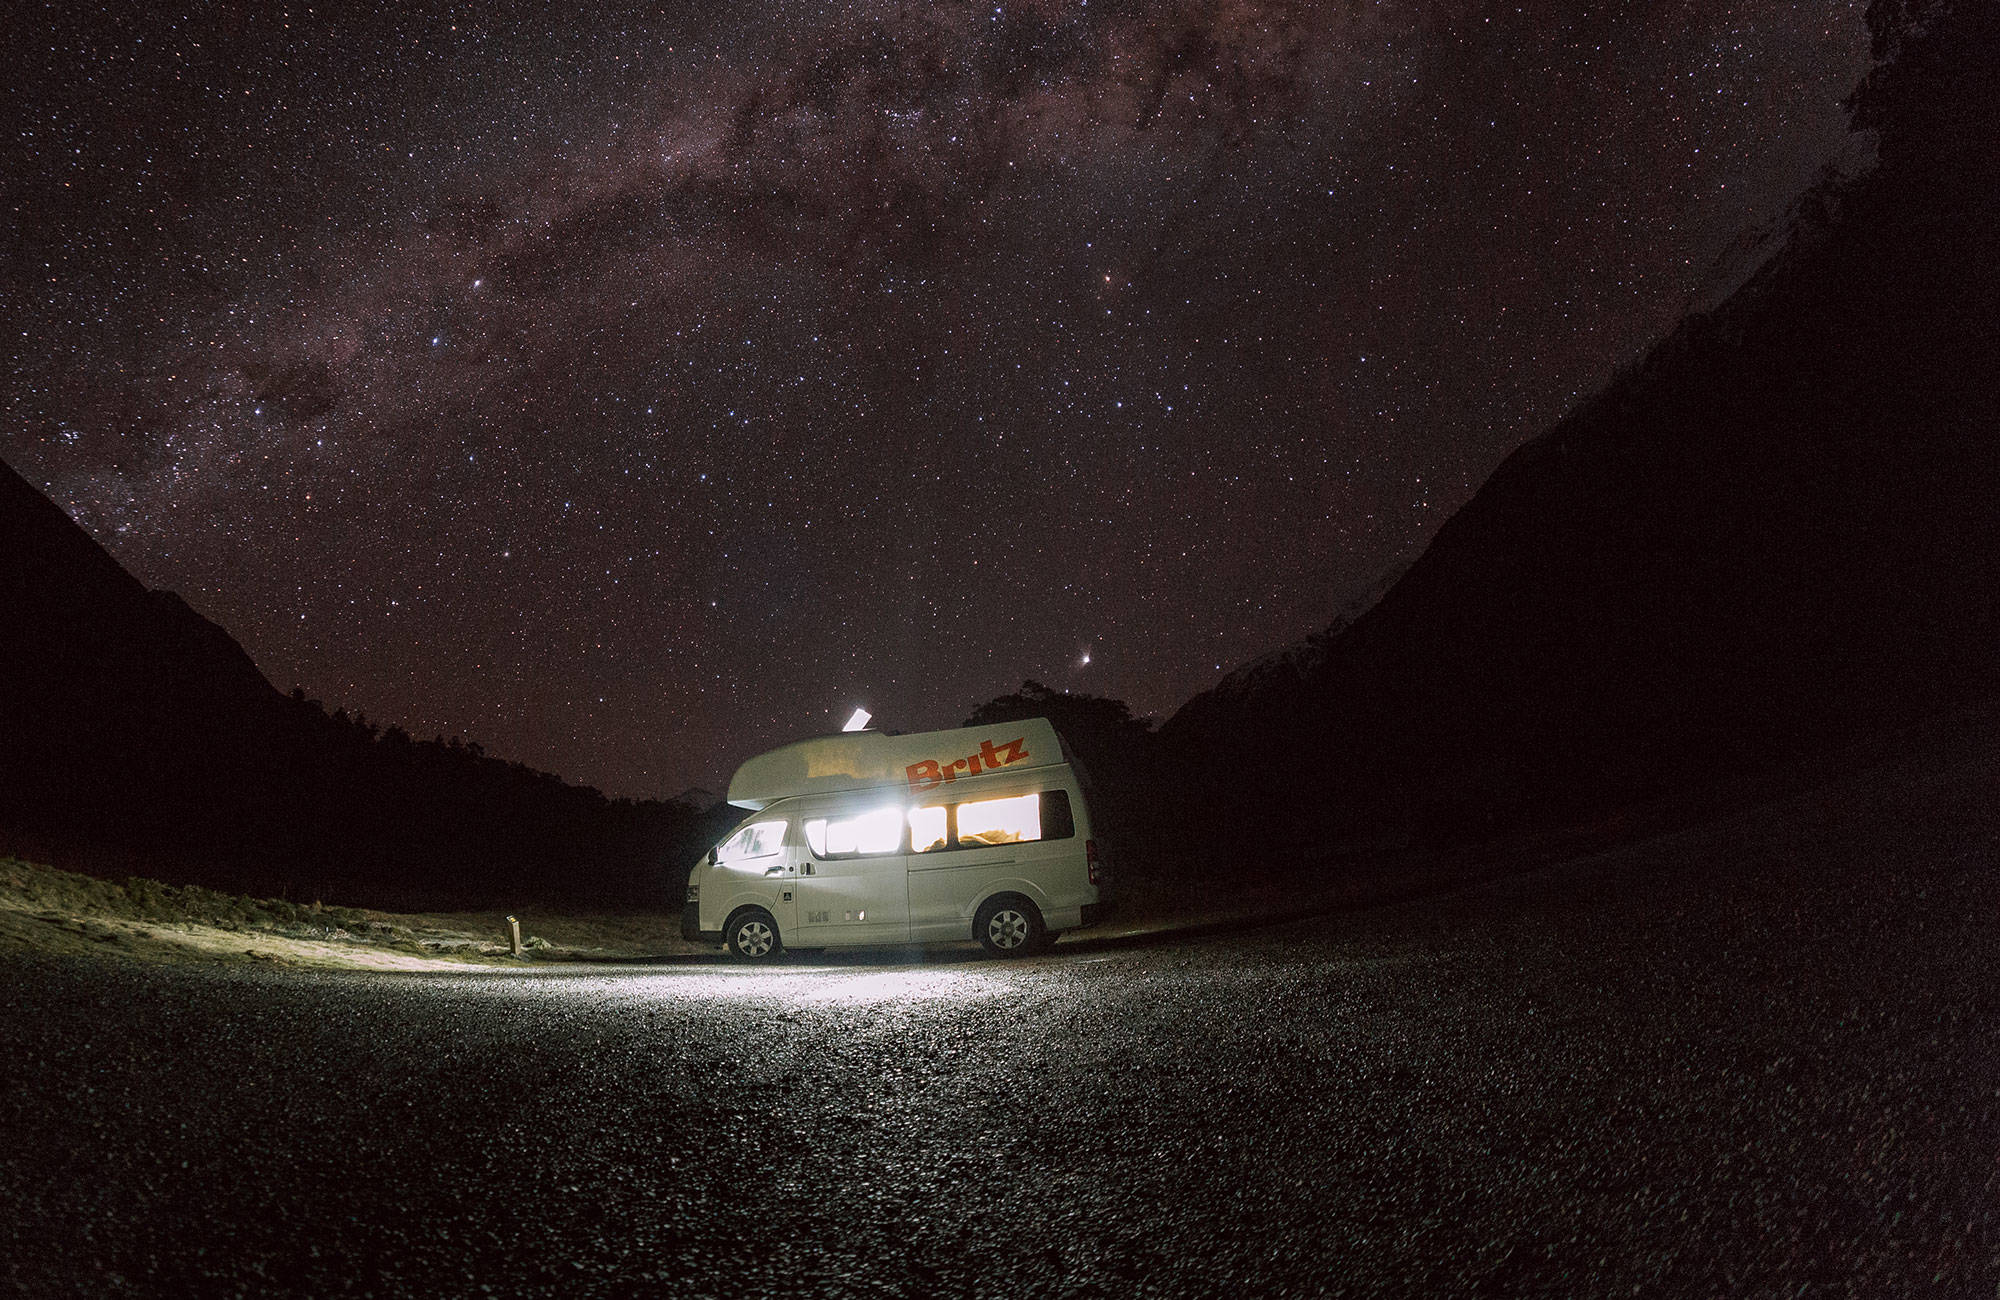 Britz Voyager campervan i Nya Zeeland